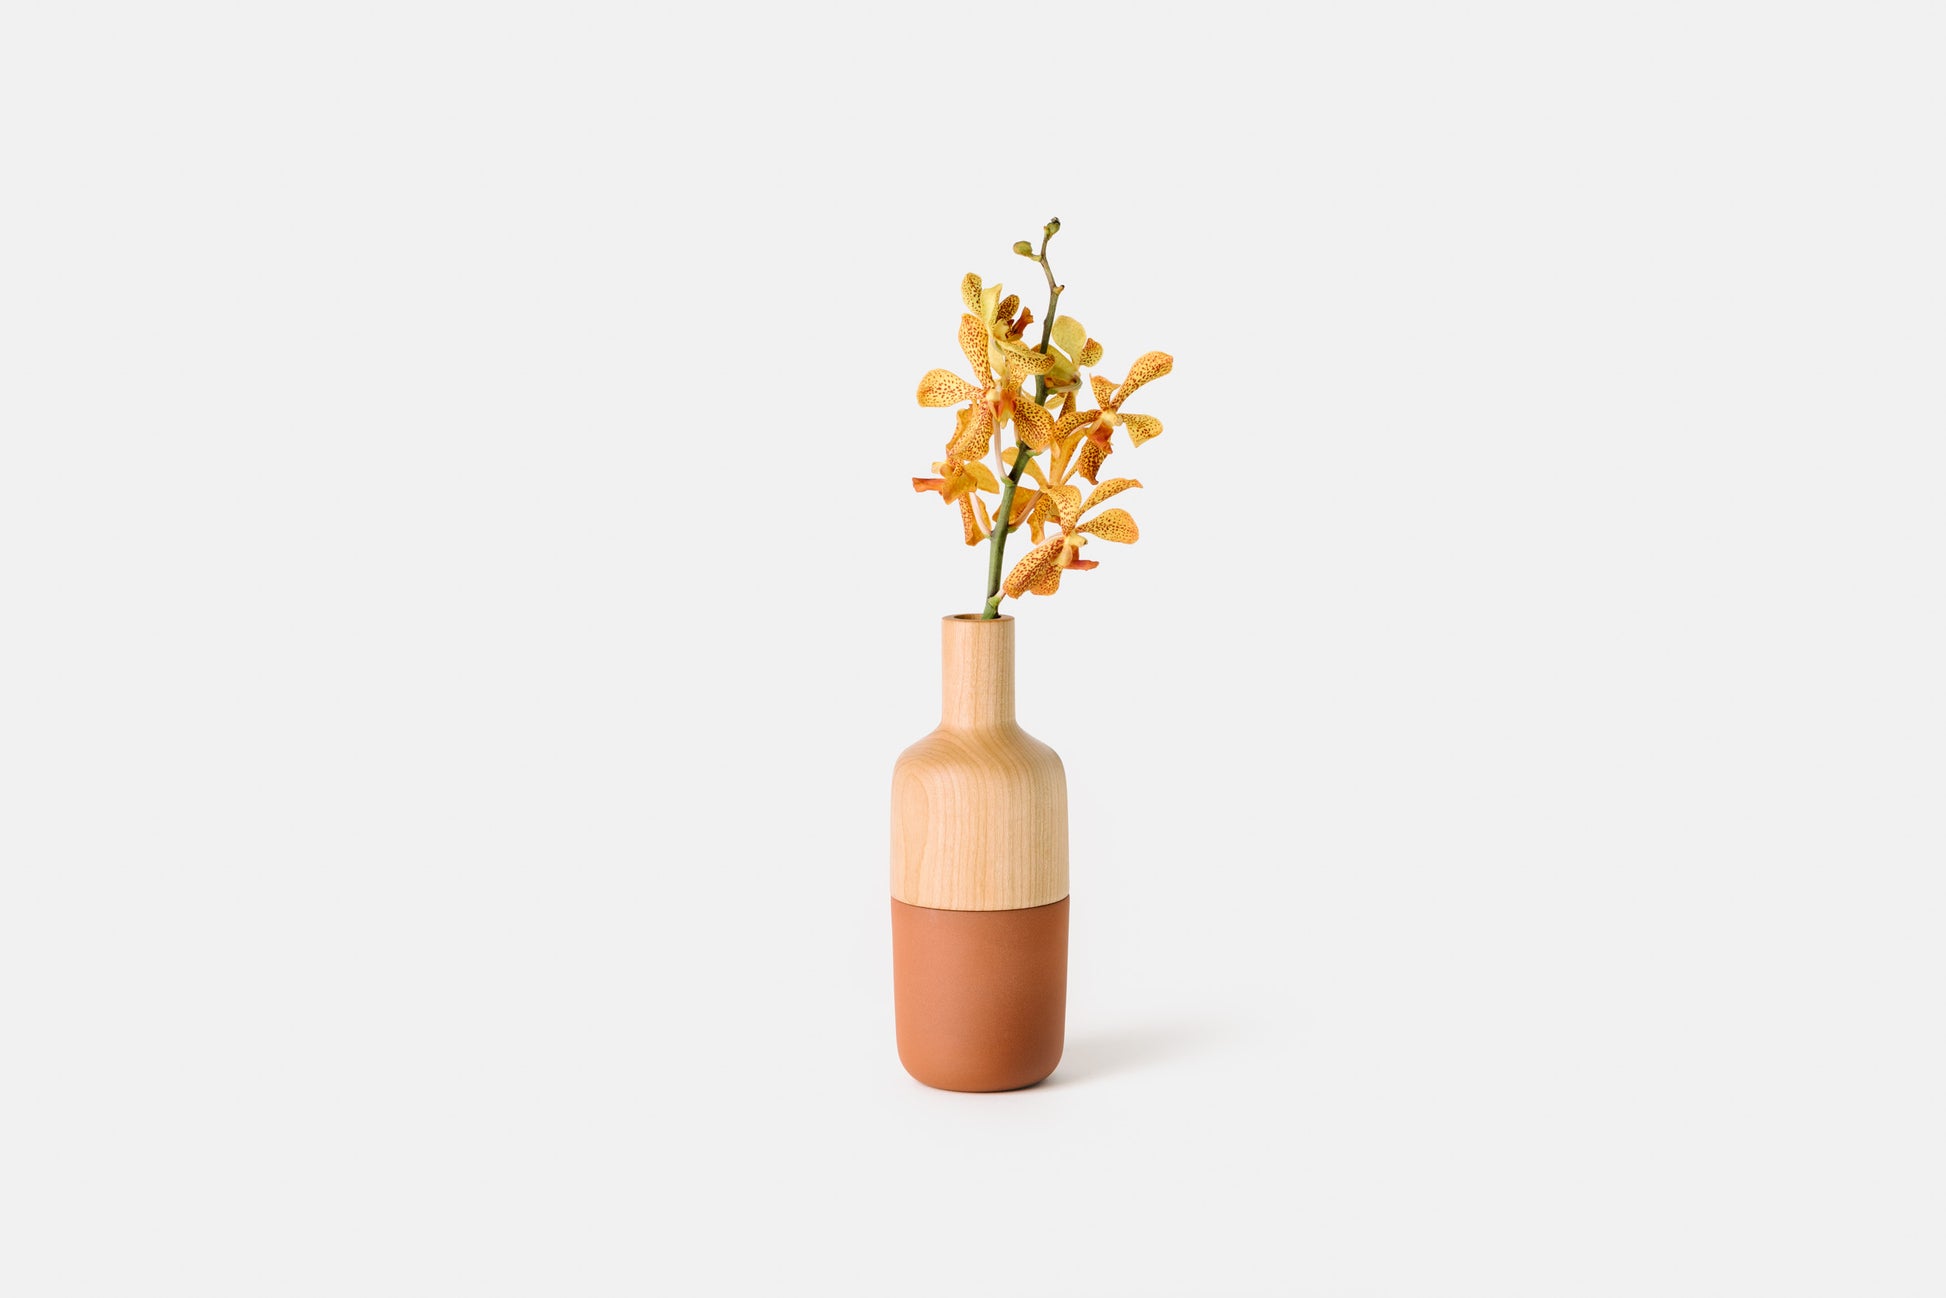 Cherry and terracotta marais vase by Melanie Abrantes Designs.